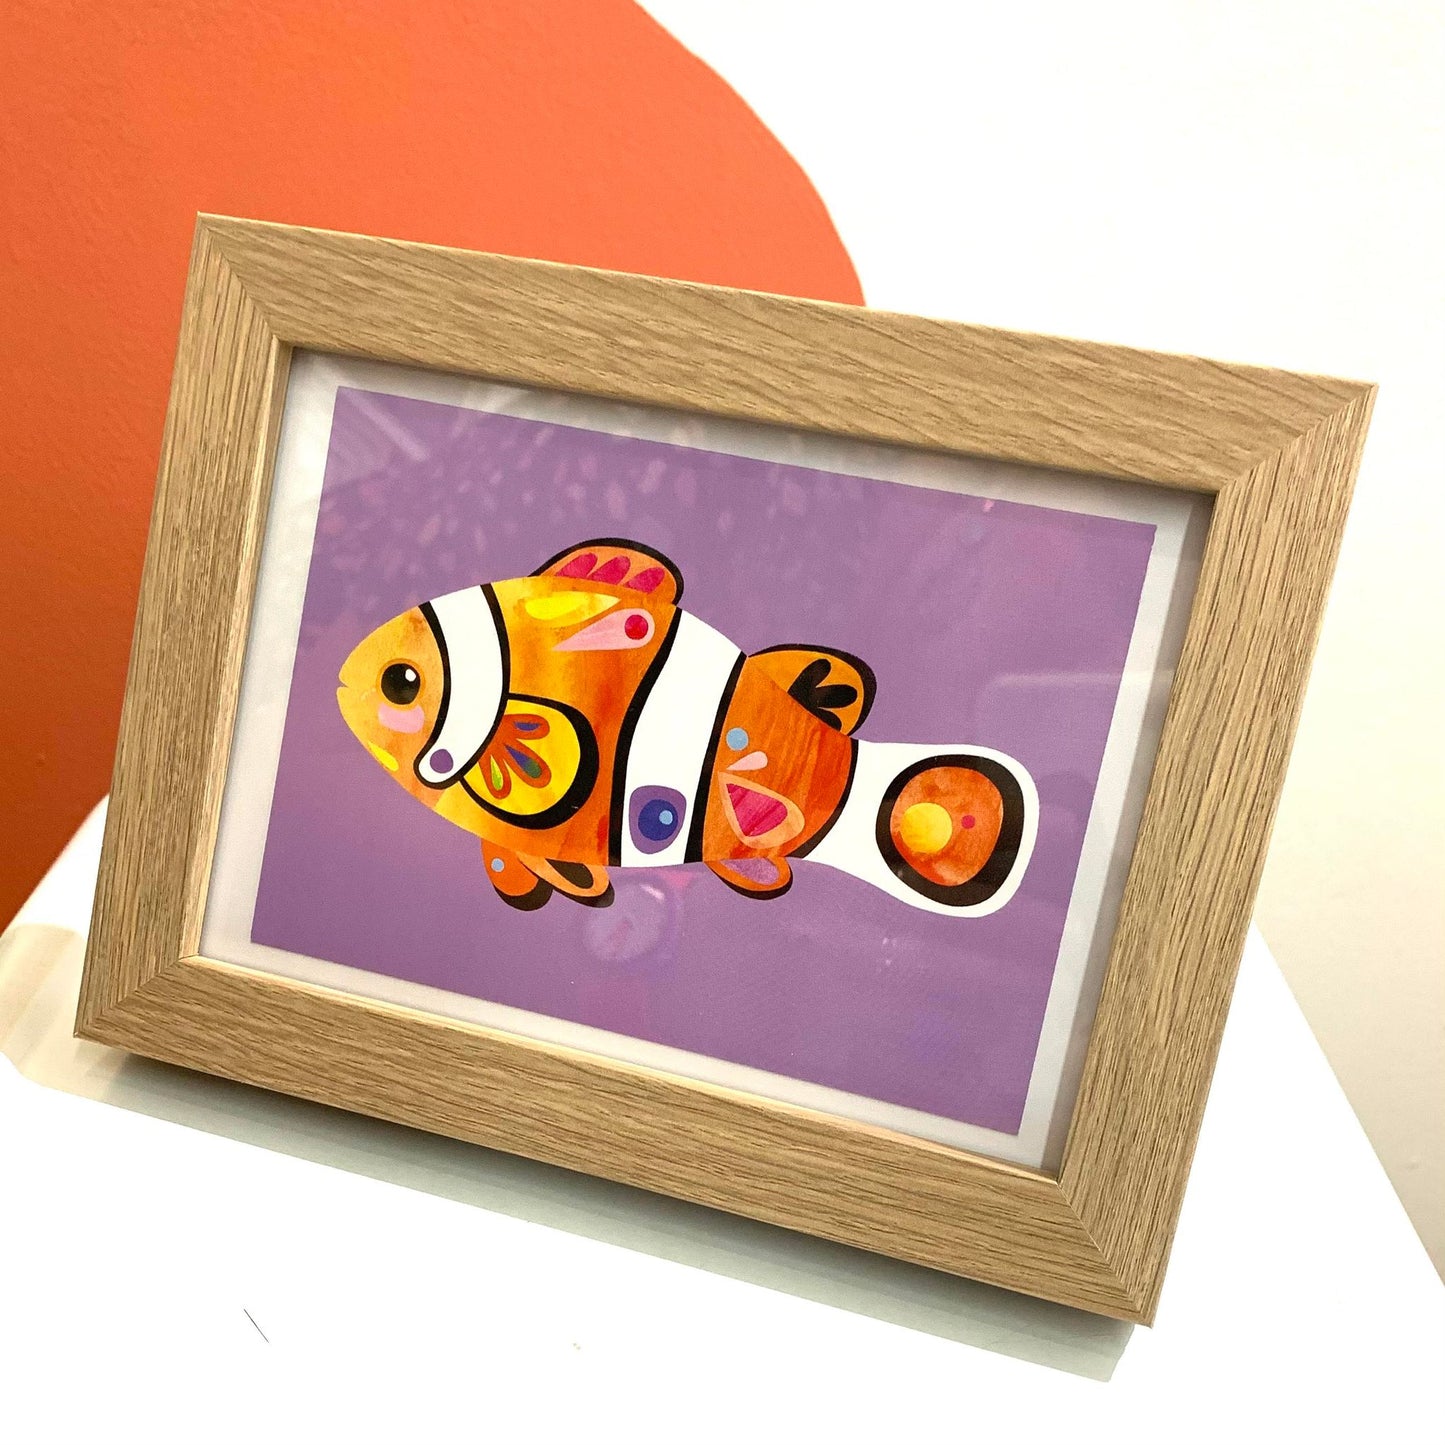 MAKIN' WHOOPEE - Framed "Clown Fish" Pete Cromer Print